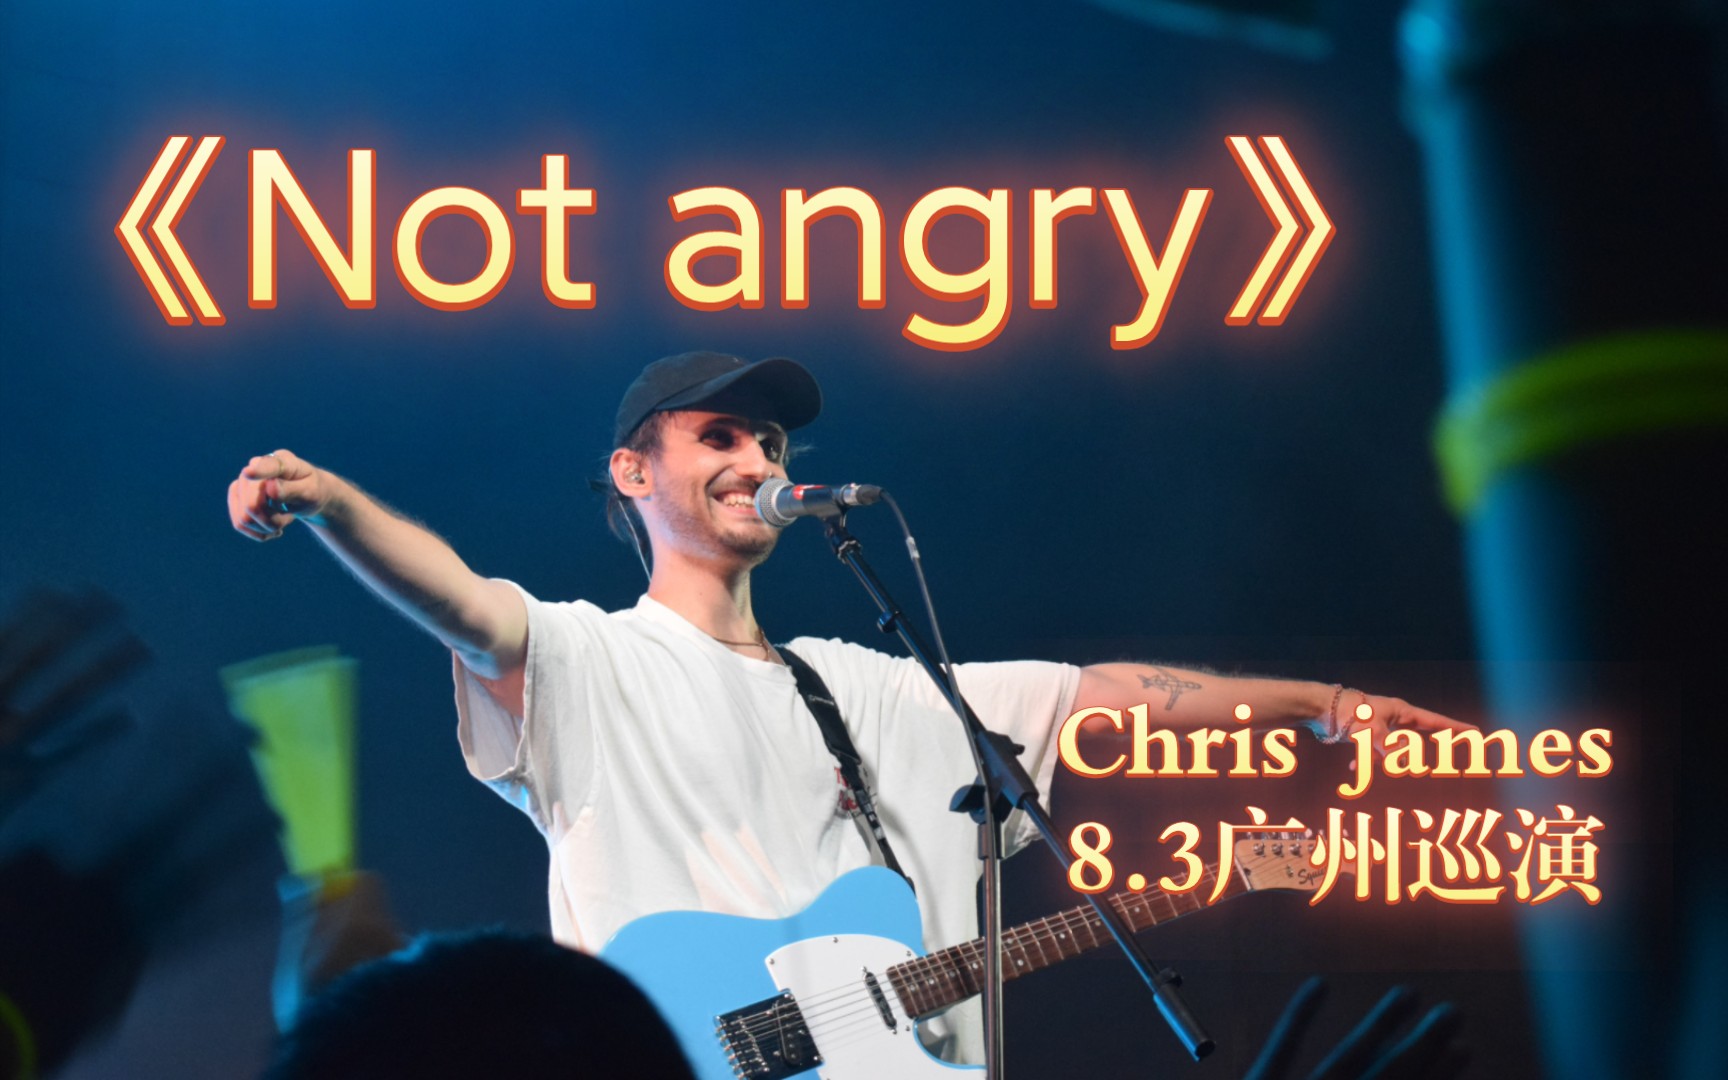 Chris james 8.3广州巡演之全网爆火神曲——Not angry   超嗨！！！